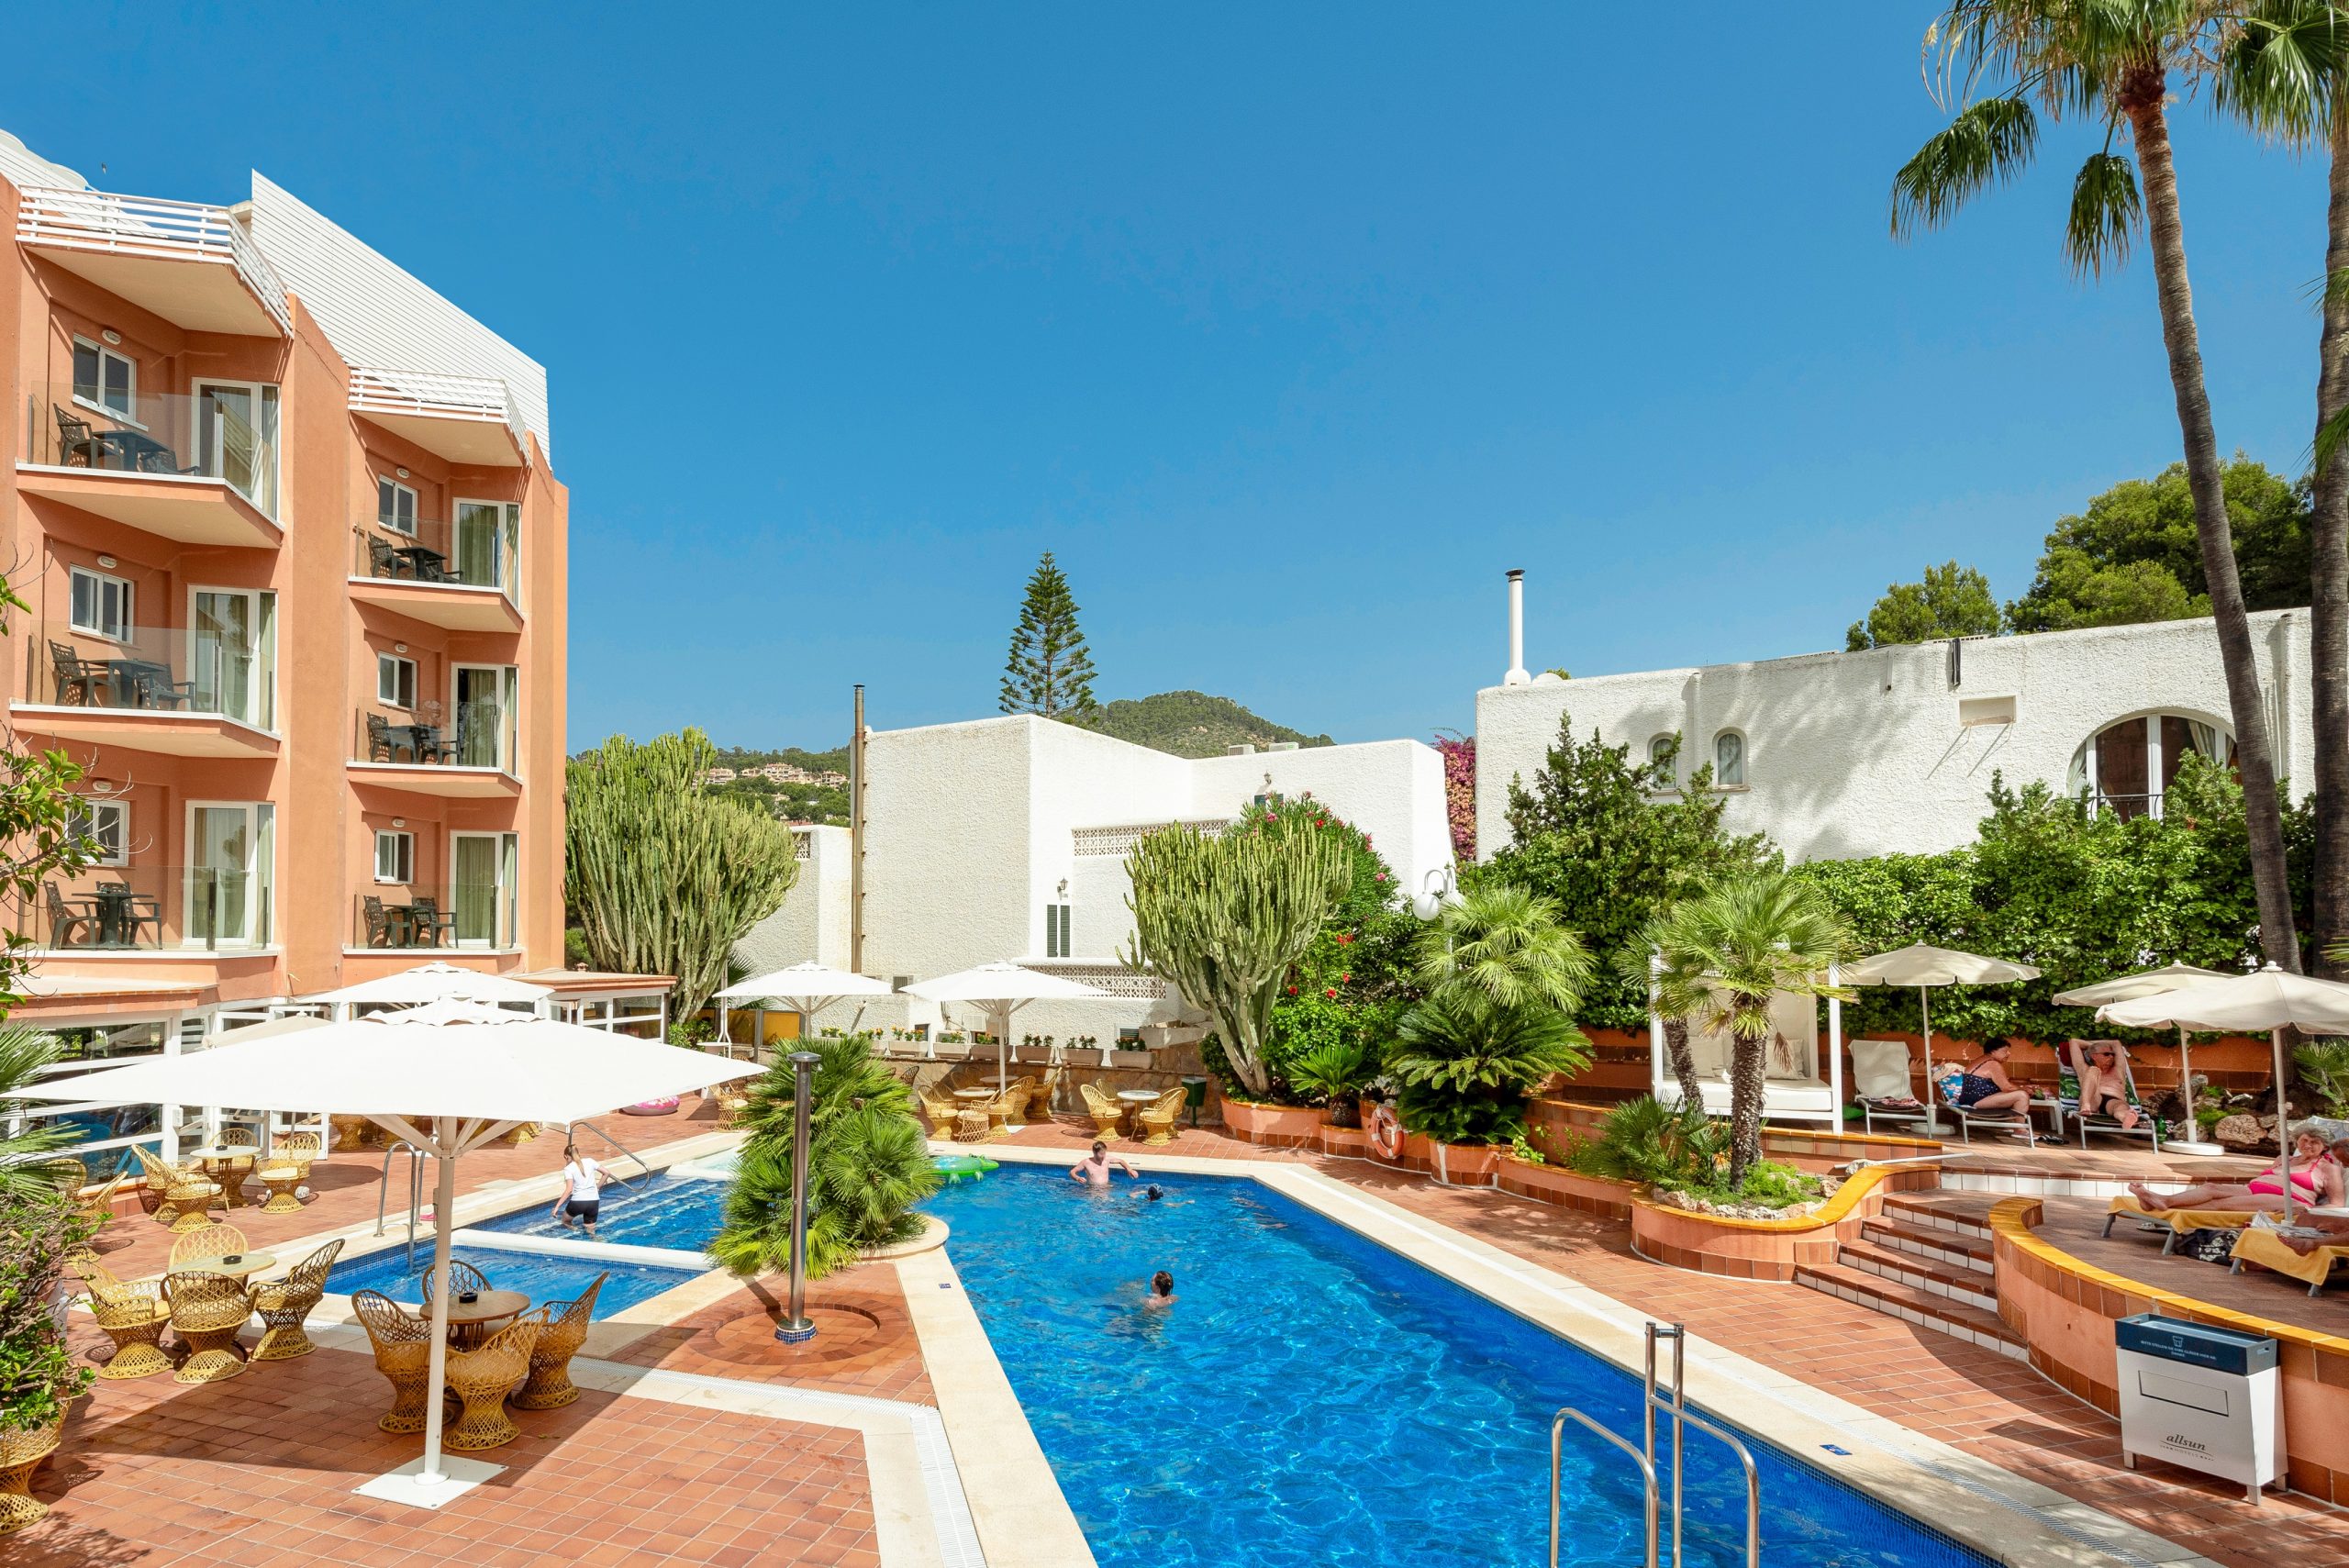 allsun Hotel Vera Beach auf Mallorca feiert Eröffnung